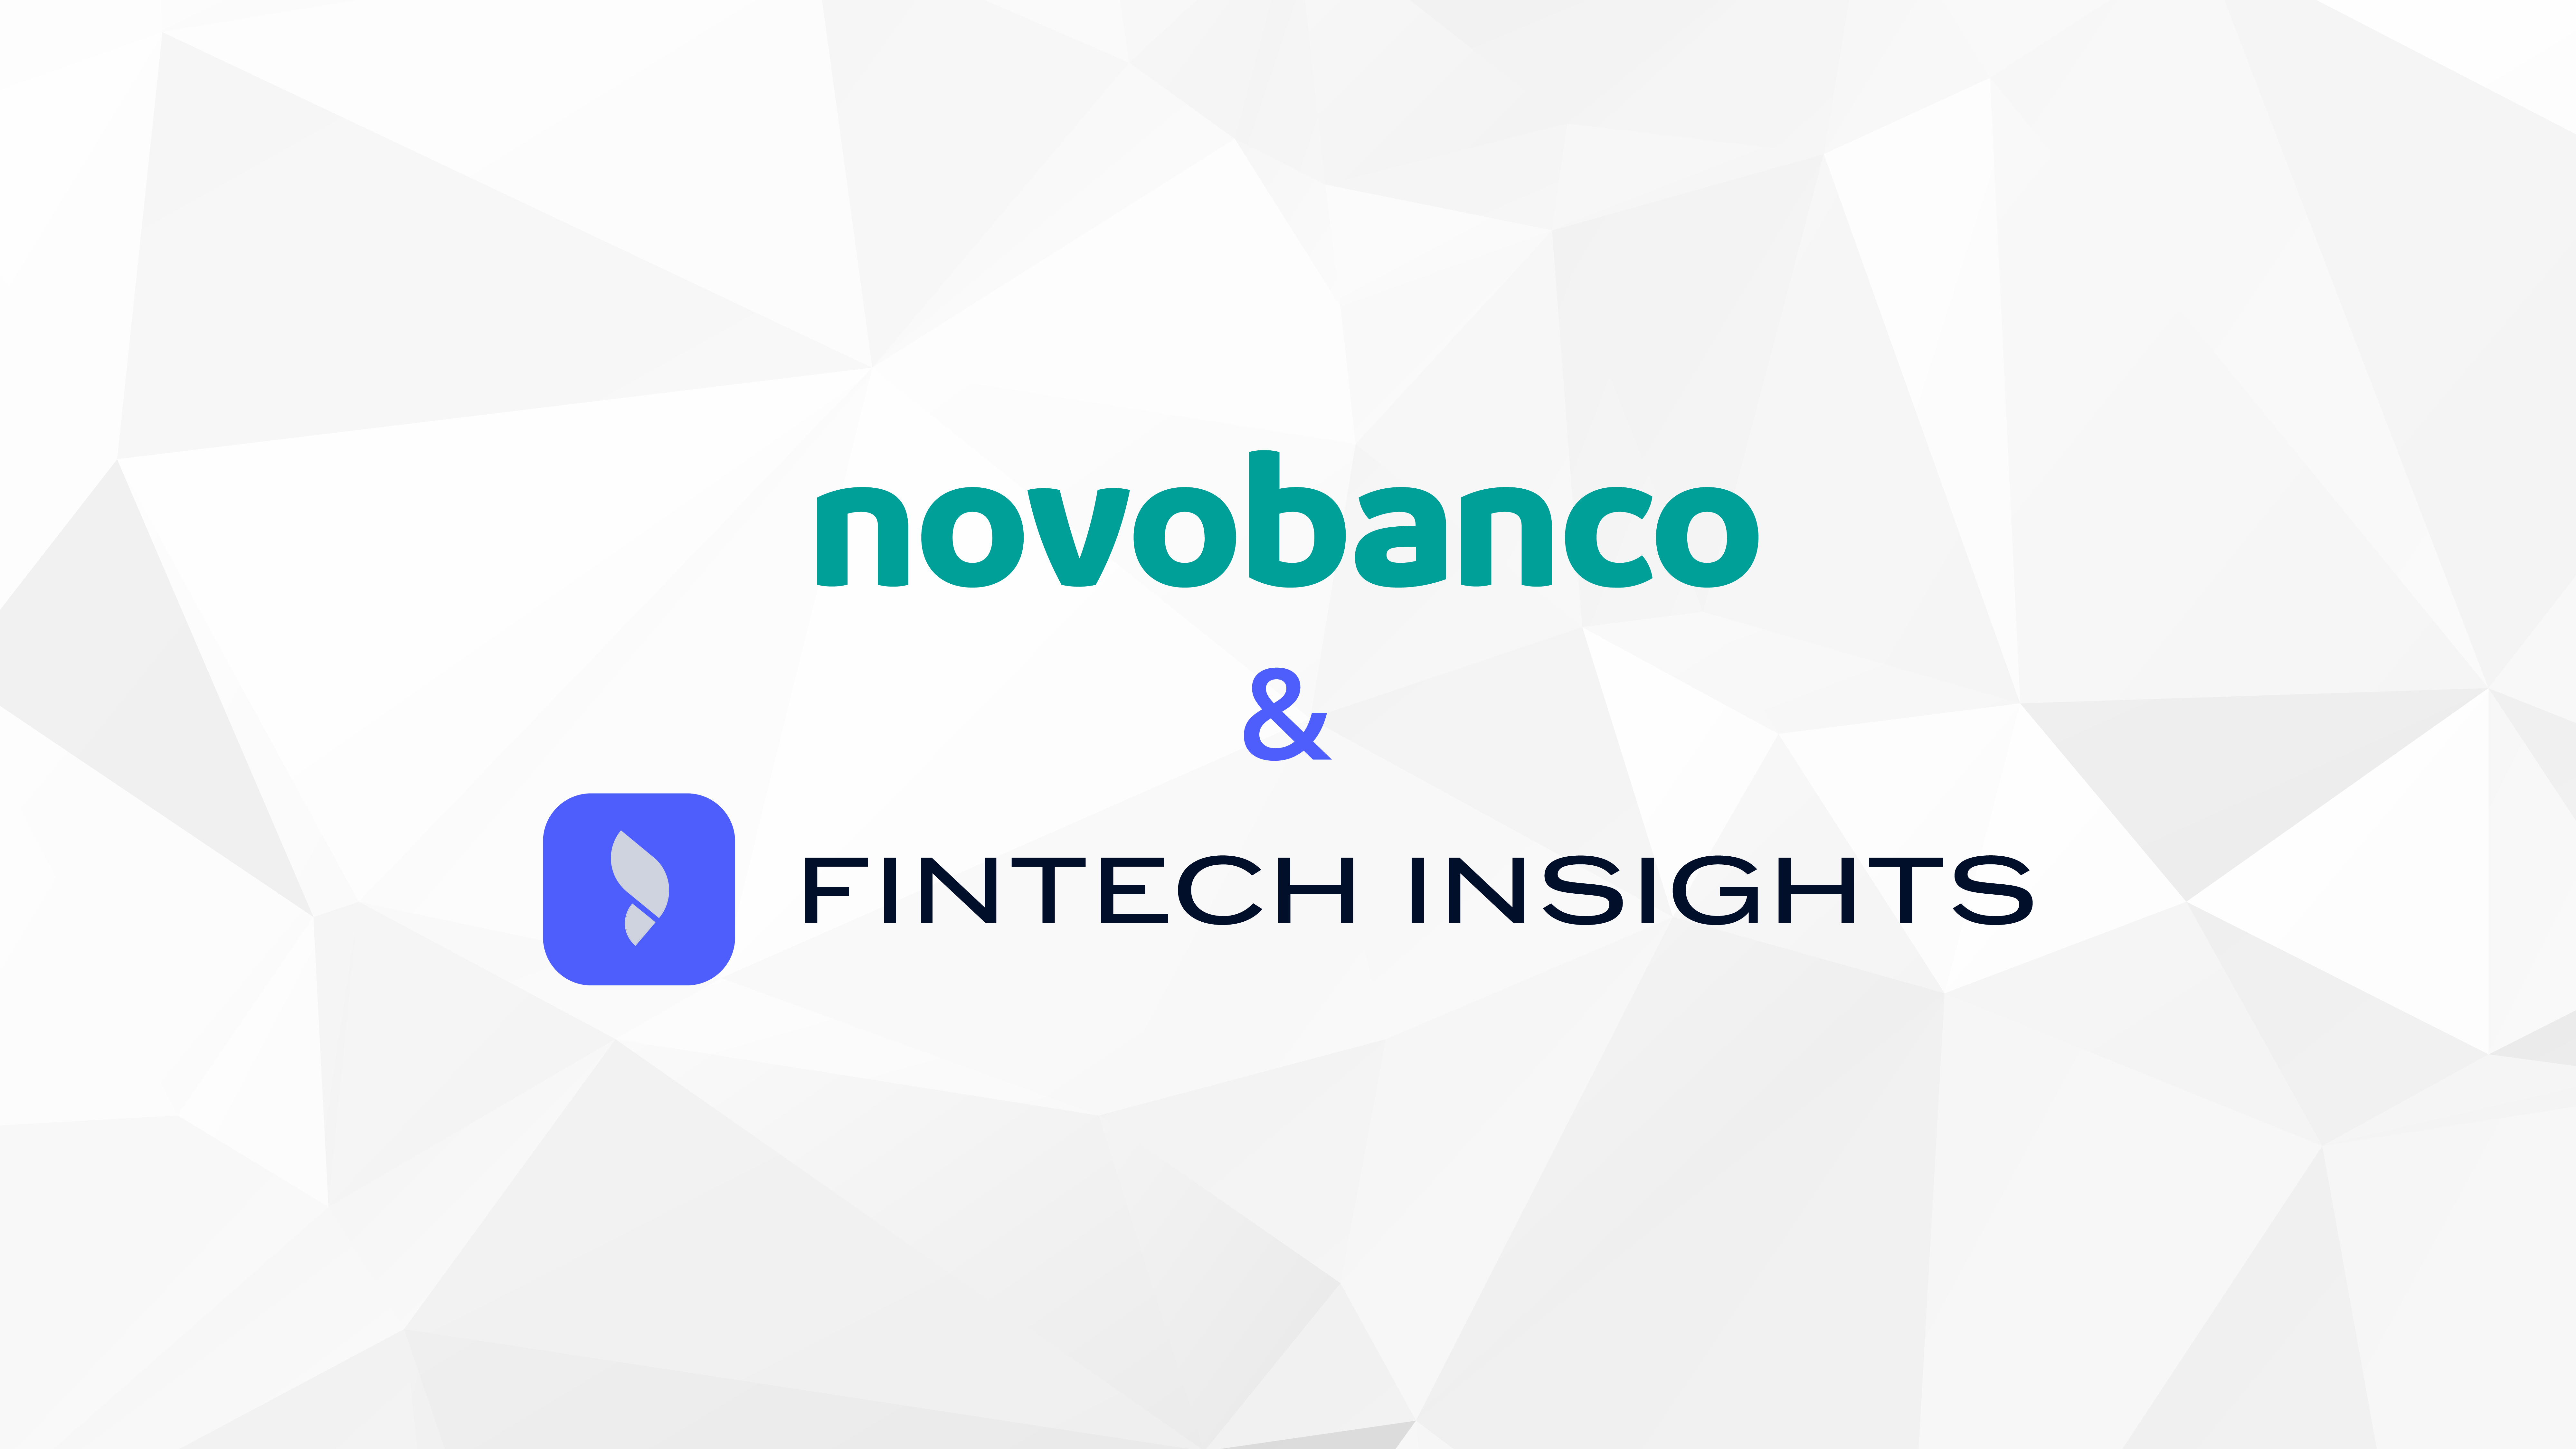 FinTech Insights Powers novobanco's Digital Banking Innovation